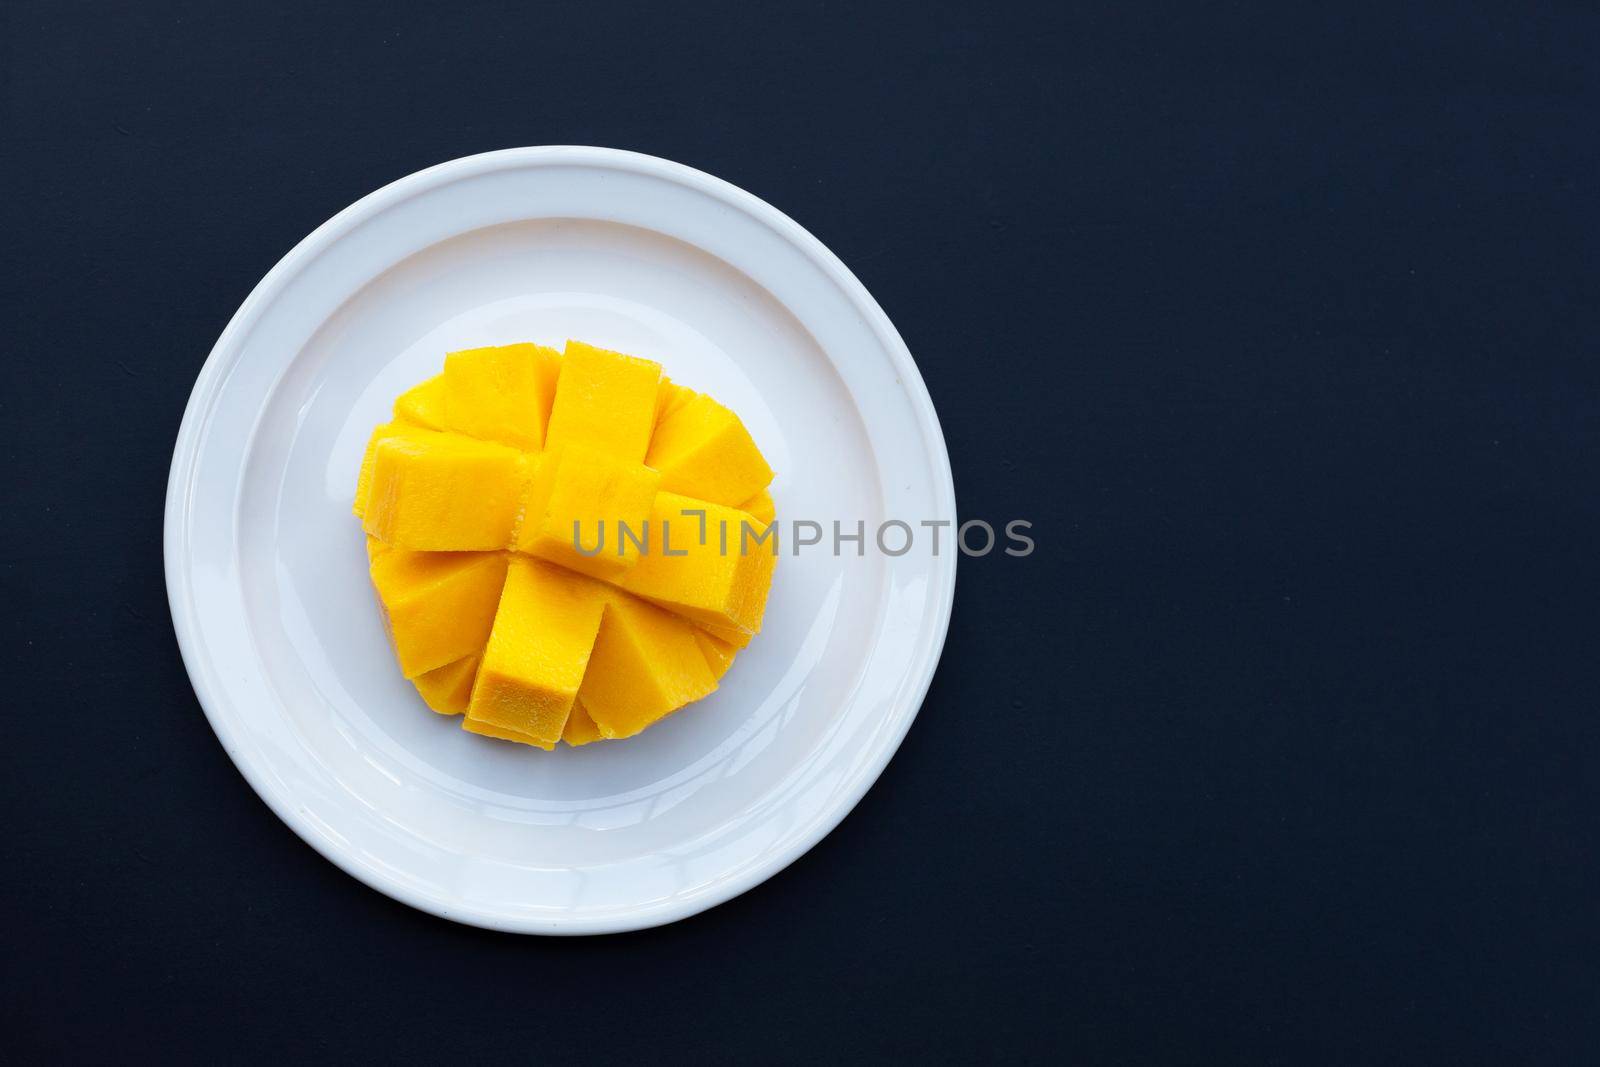 Tropical fruit, Mango  on dark background. by Bowonpat